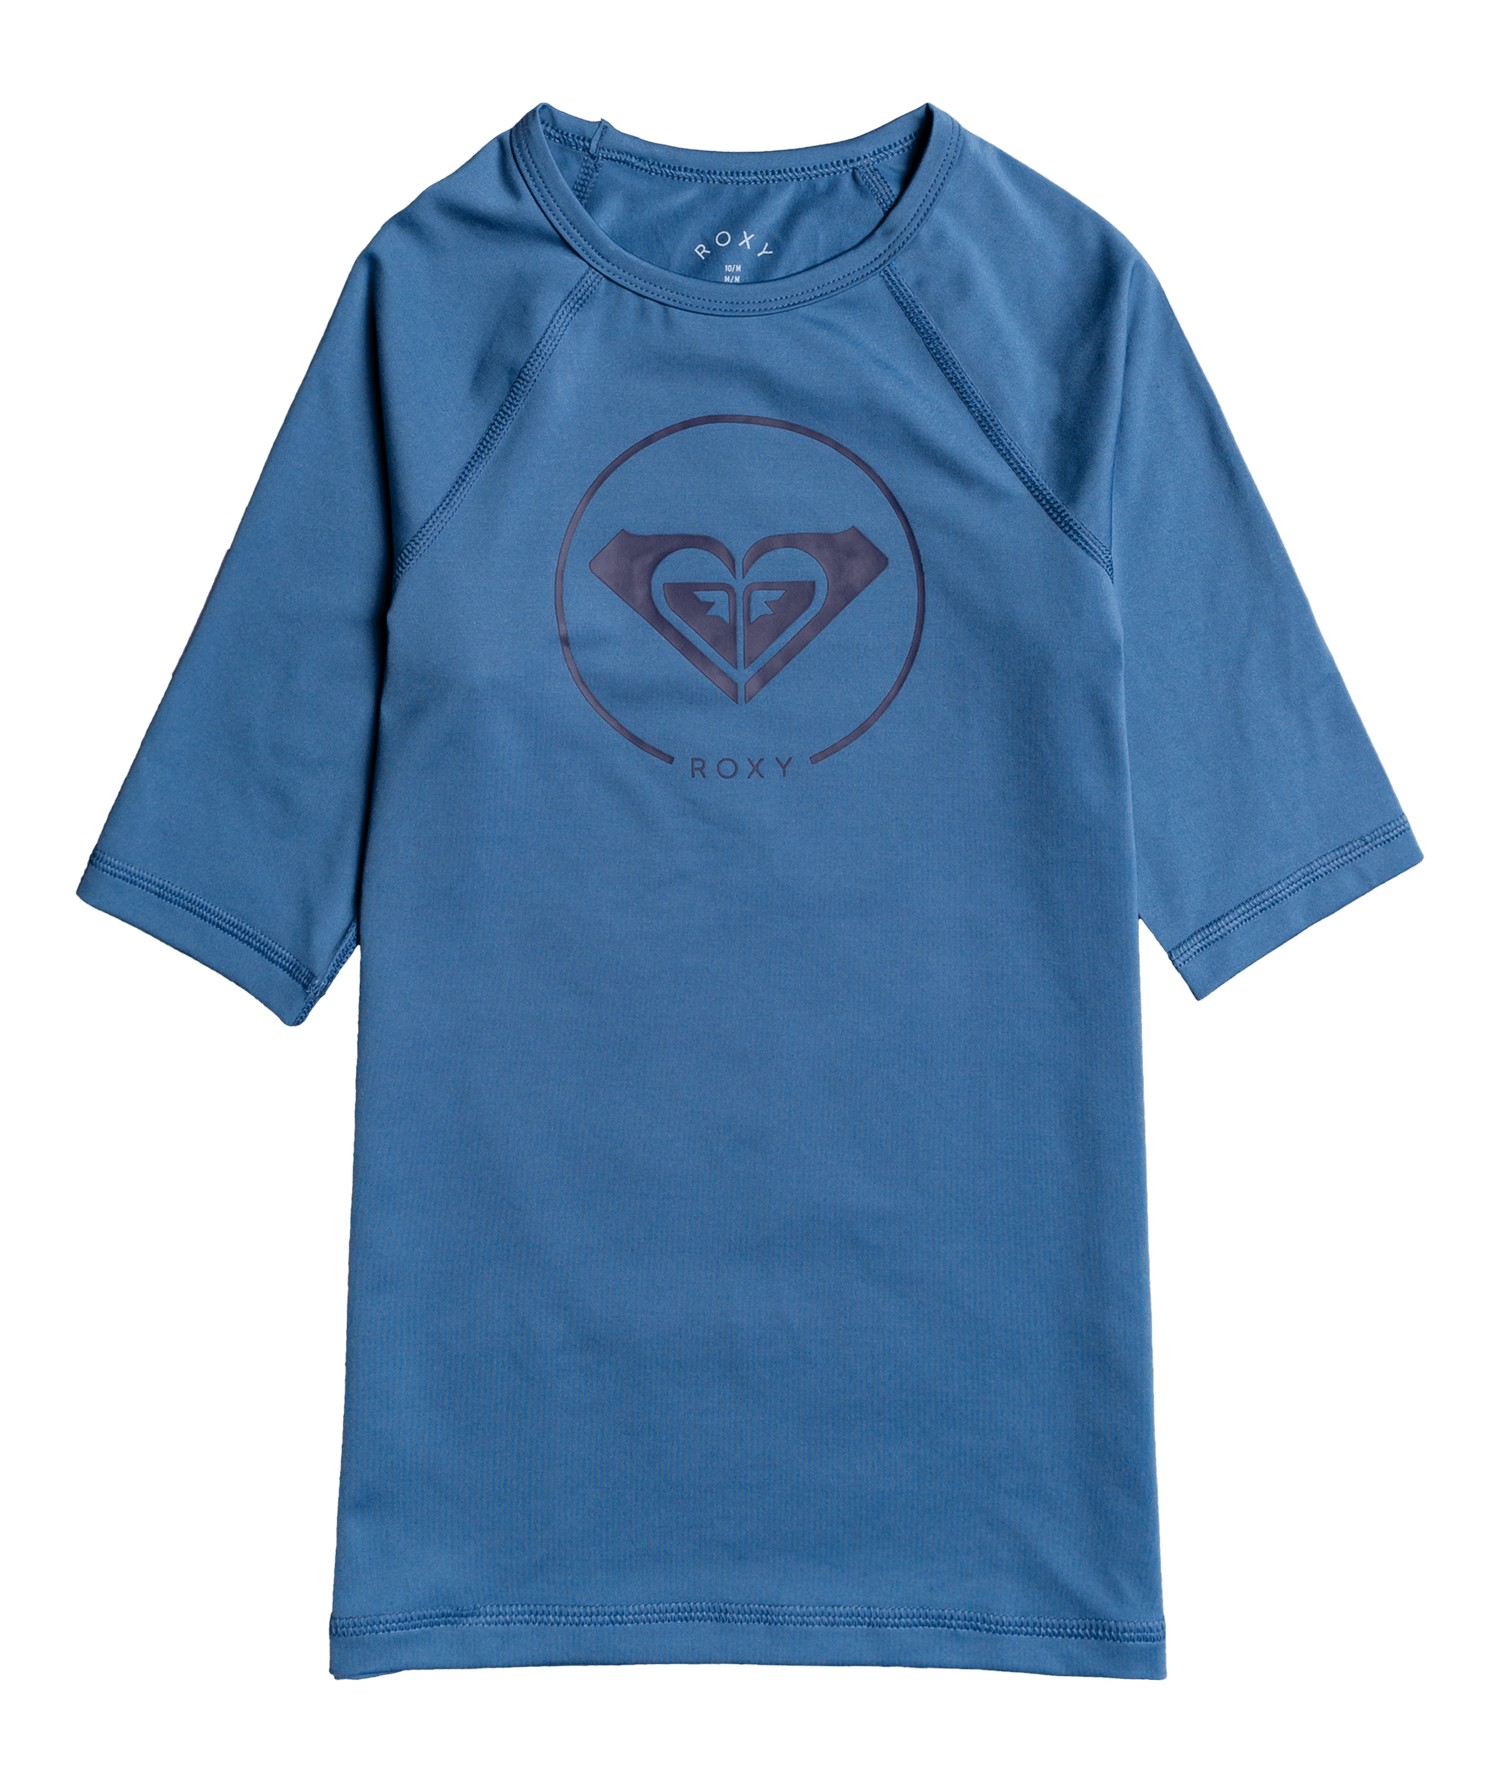 Roxy - UV Swim shirt for teen girls - Beach Classics - Moonlight Blue